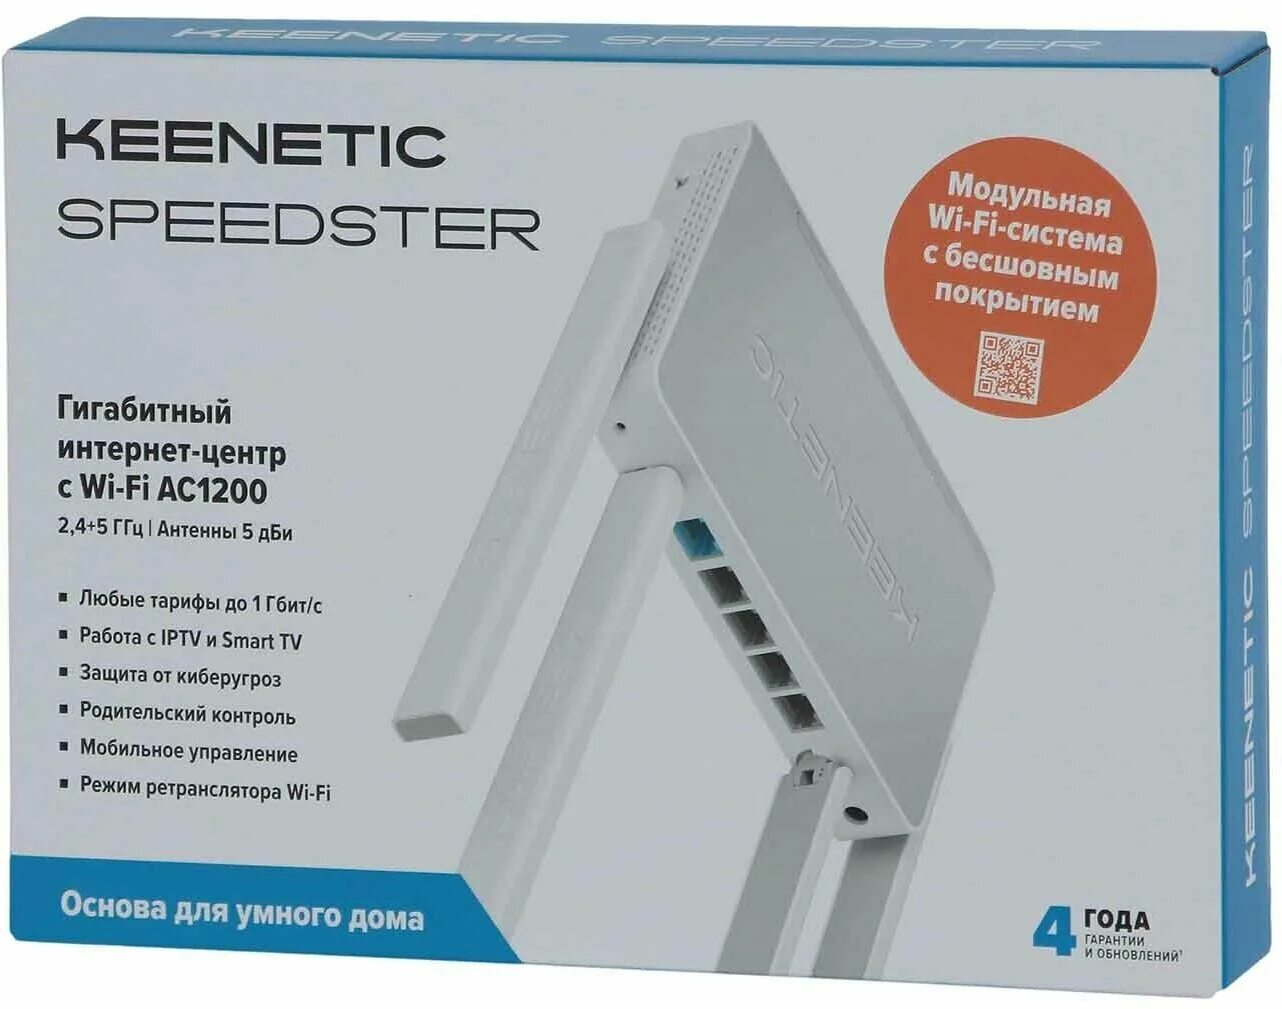 Кинетик спидстер купить. Keenetic Speedster (KN-3010). Роутер Кинетик 3010. Wi-Fi роутер Keenetic Speedster. Гигабитный интернет-центр с Mesh Wi-Fi 5 ac1200 Keenetic Speedster (KN-3012).